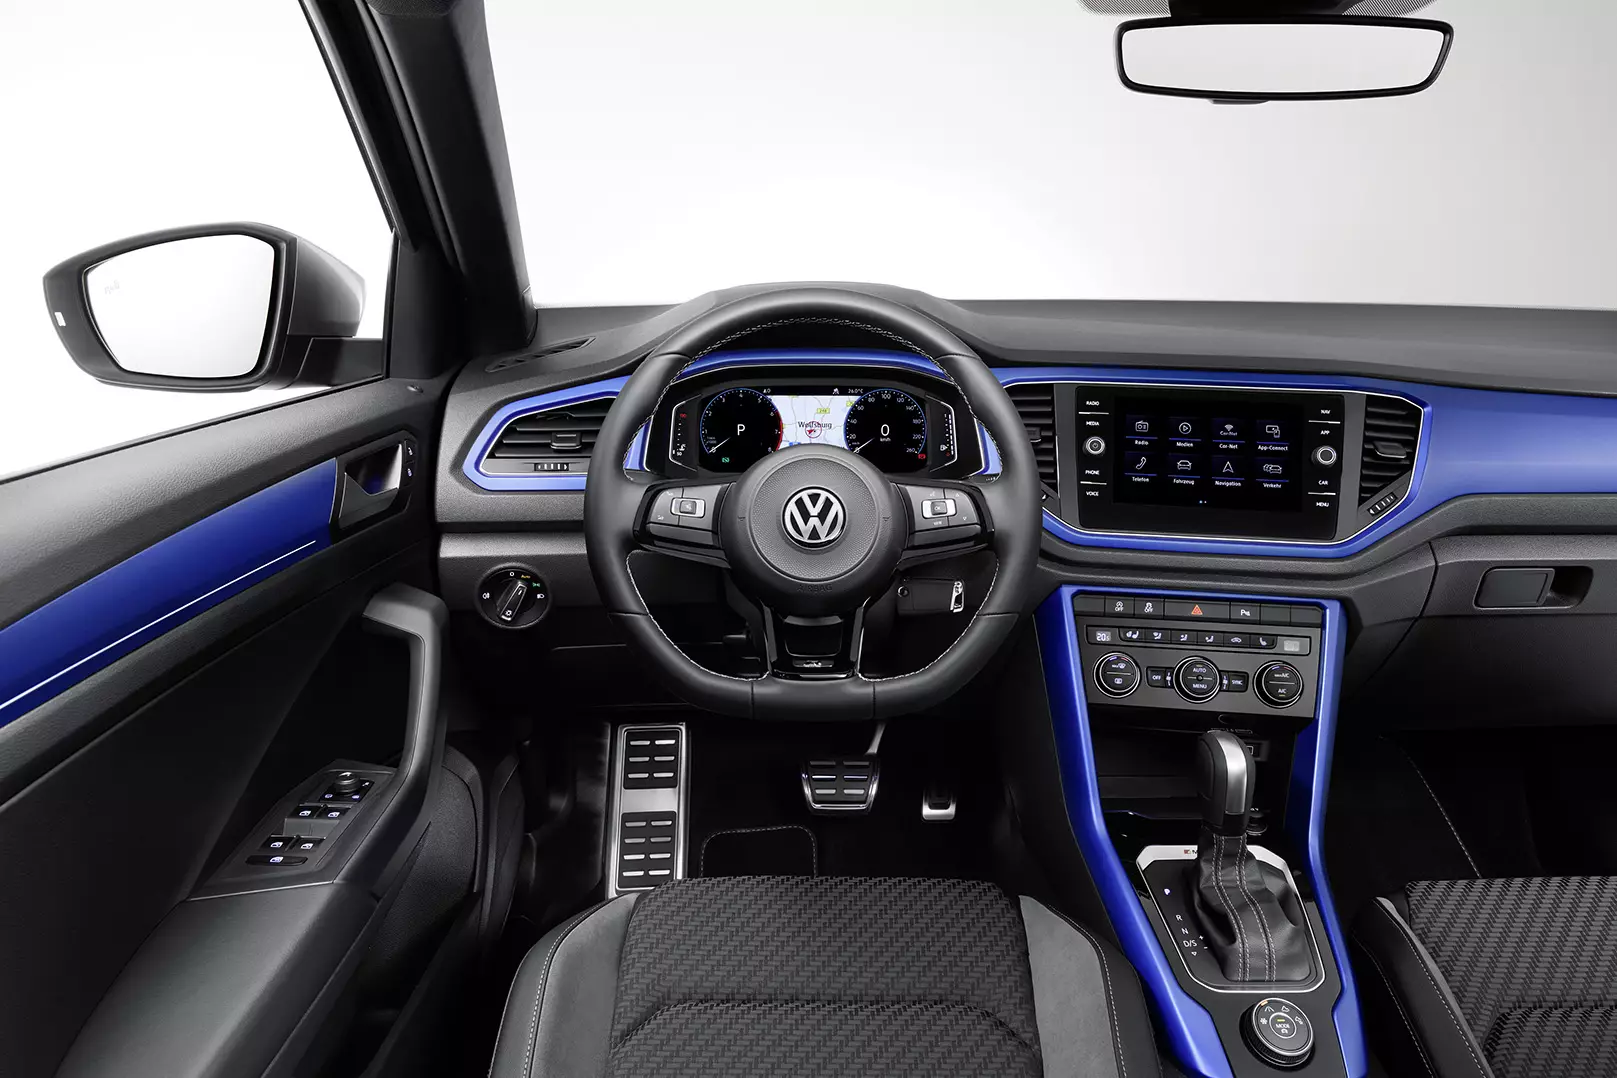 O Volkswagen T-Roc R xa ten prezo en Portugal 8549_3